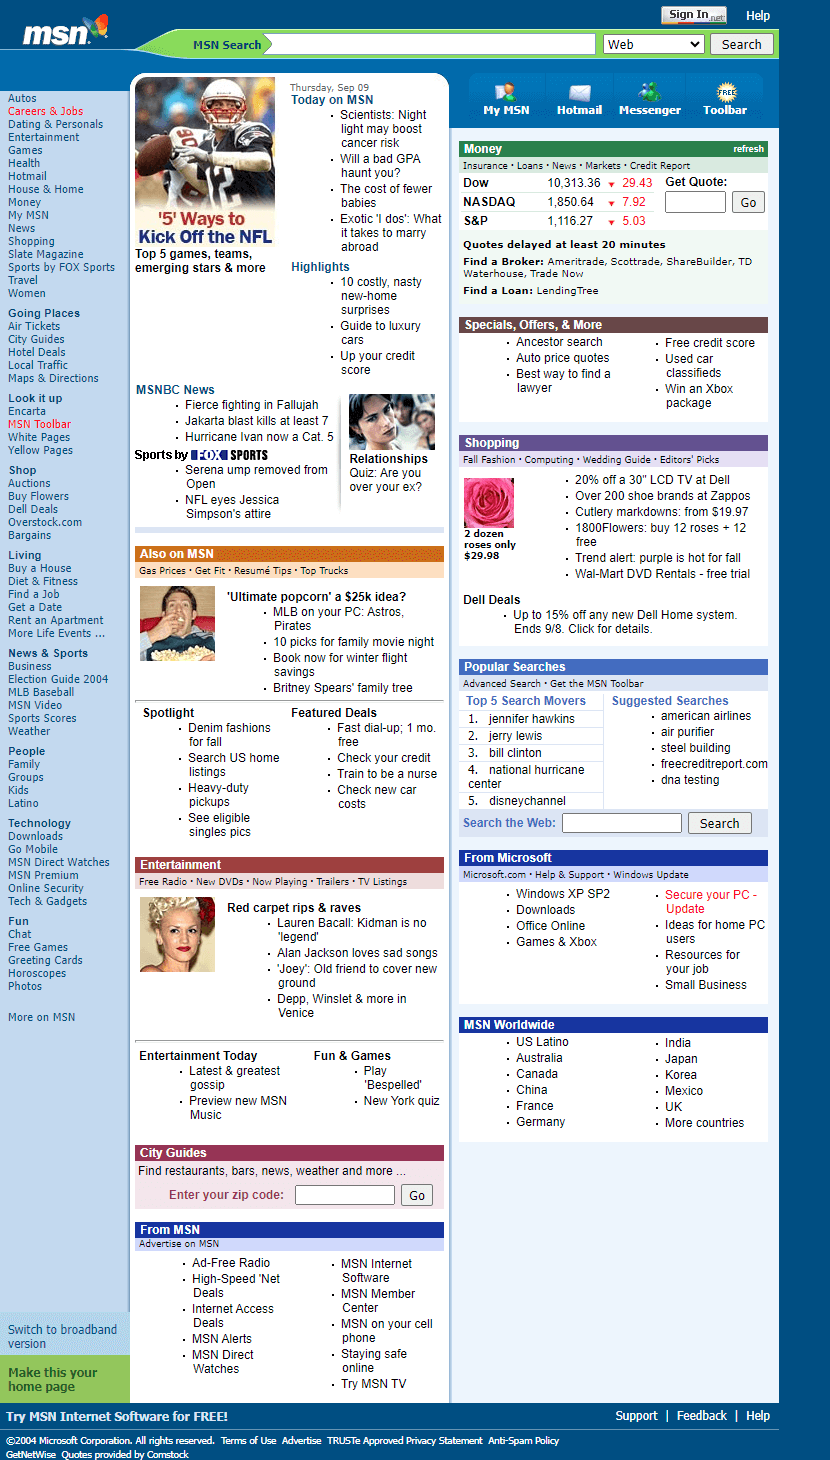 MSN website in 2004